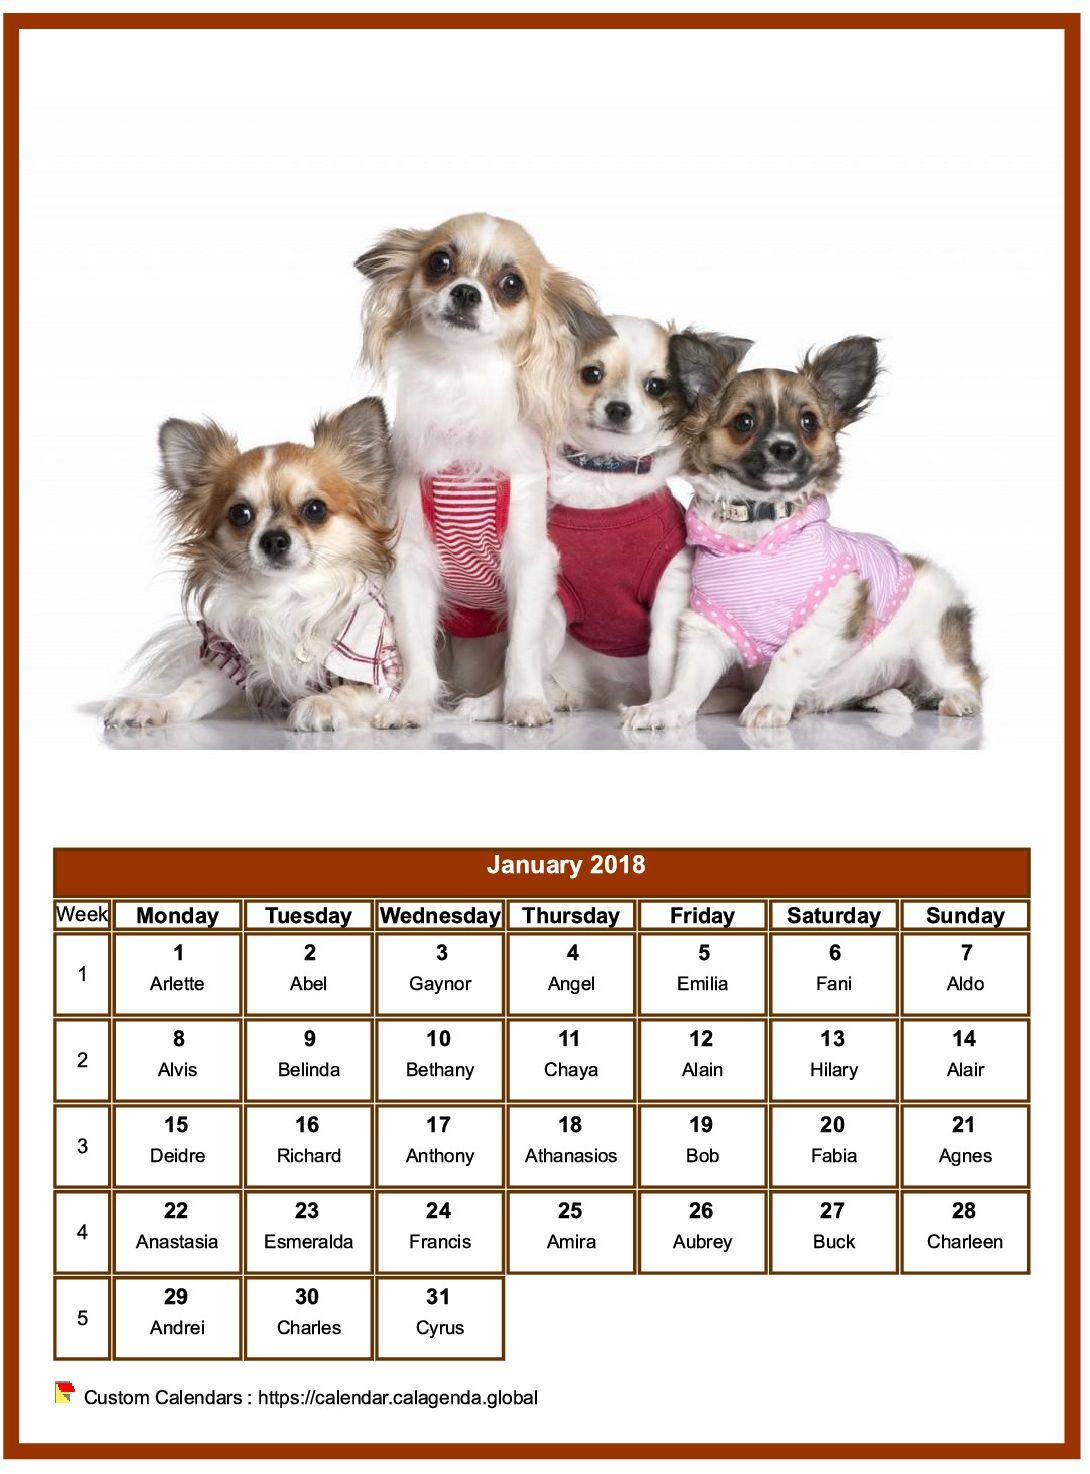 Calendar January 2018 dogs